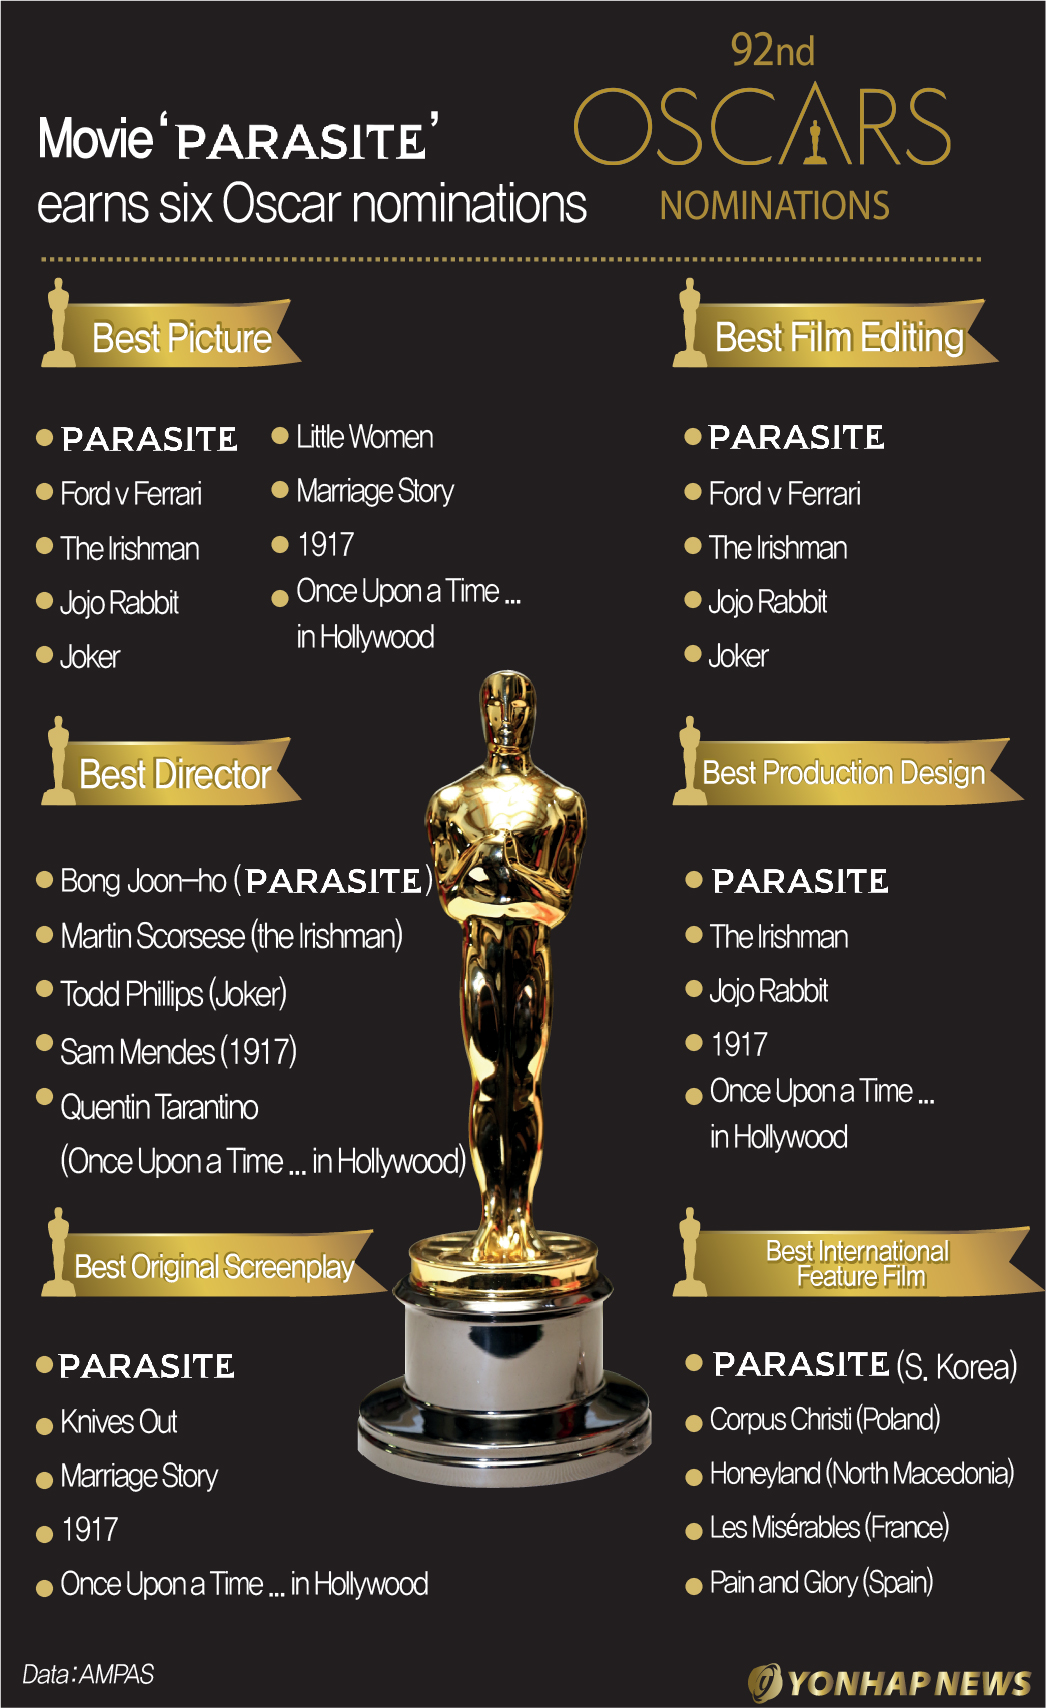 Movie 'Parasite' earns six Oscar nominations